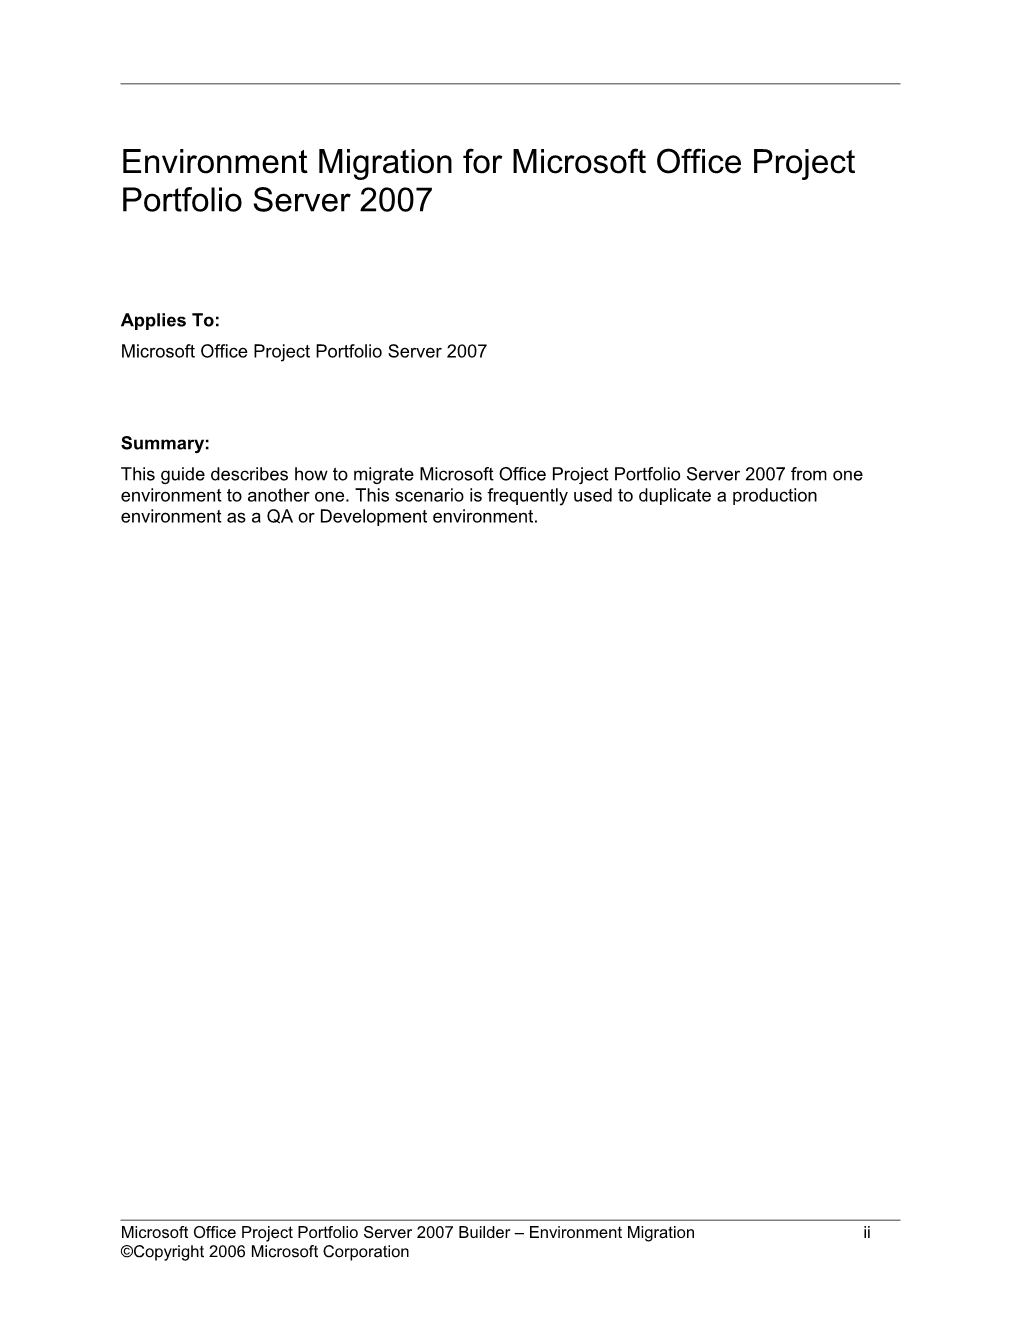 Environment Migration for Microsoft Office Project Portfolio Server 2007